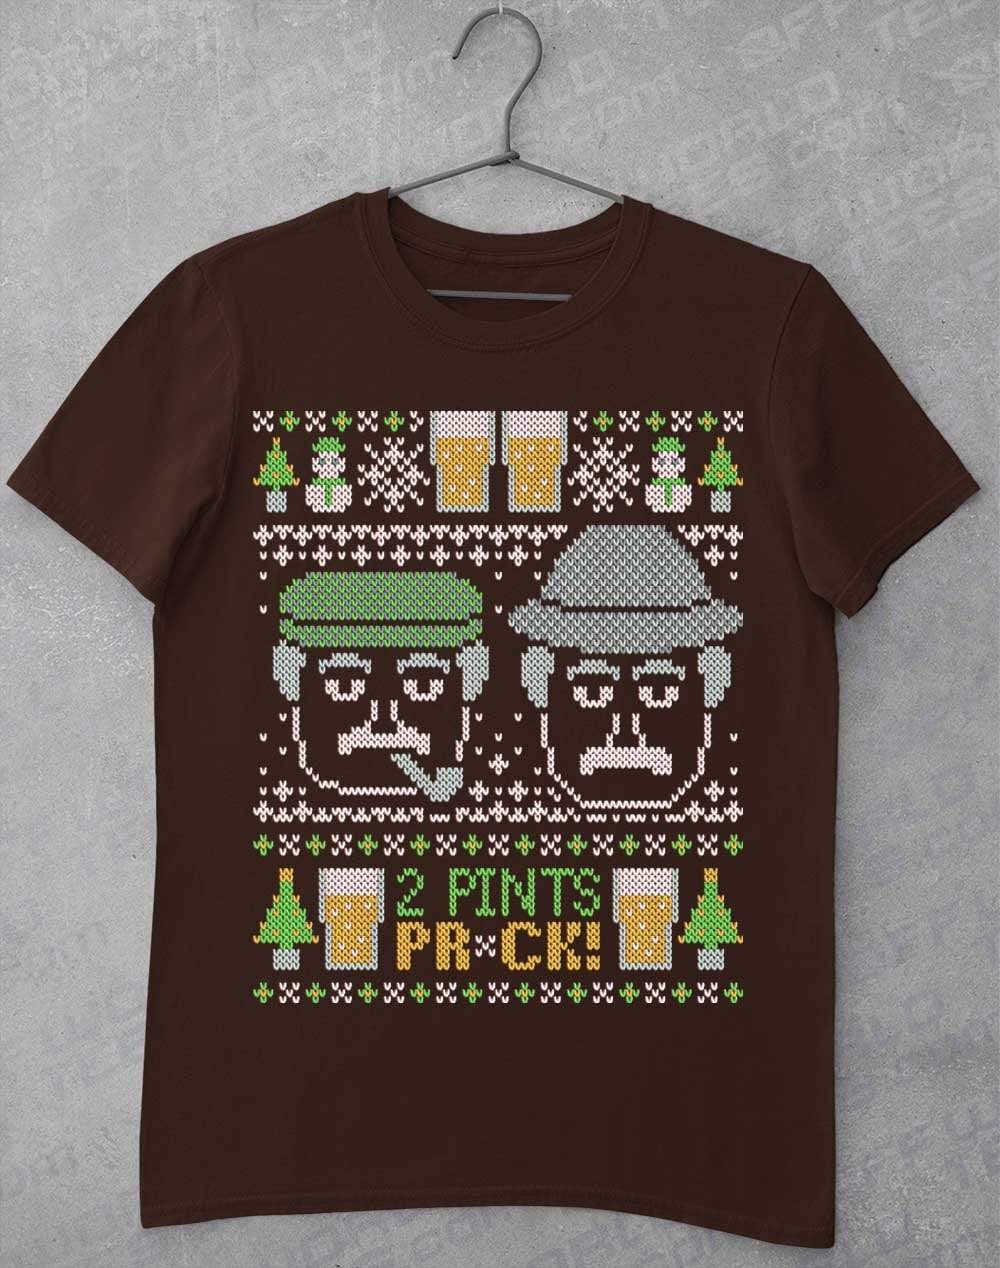 Craiglang Christmas 2 Pints Knit Pattern T-Shirt S / Dark Chocolate  - Off World Tees